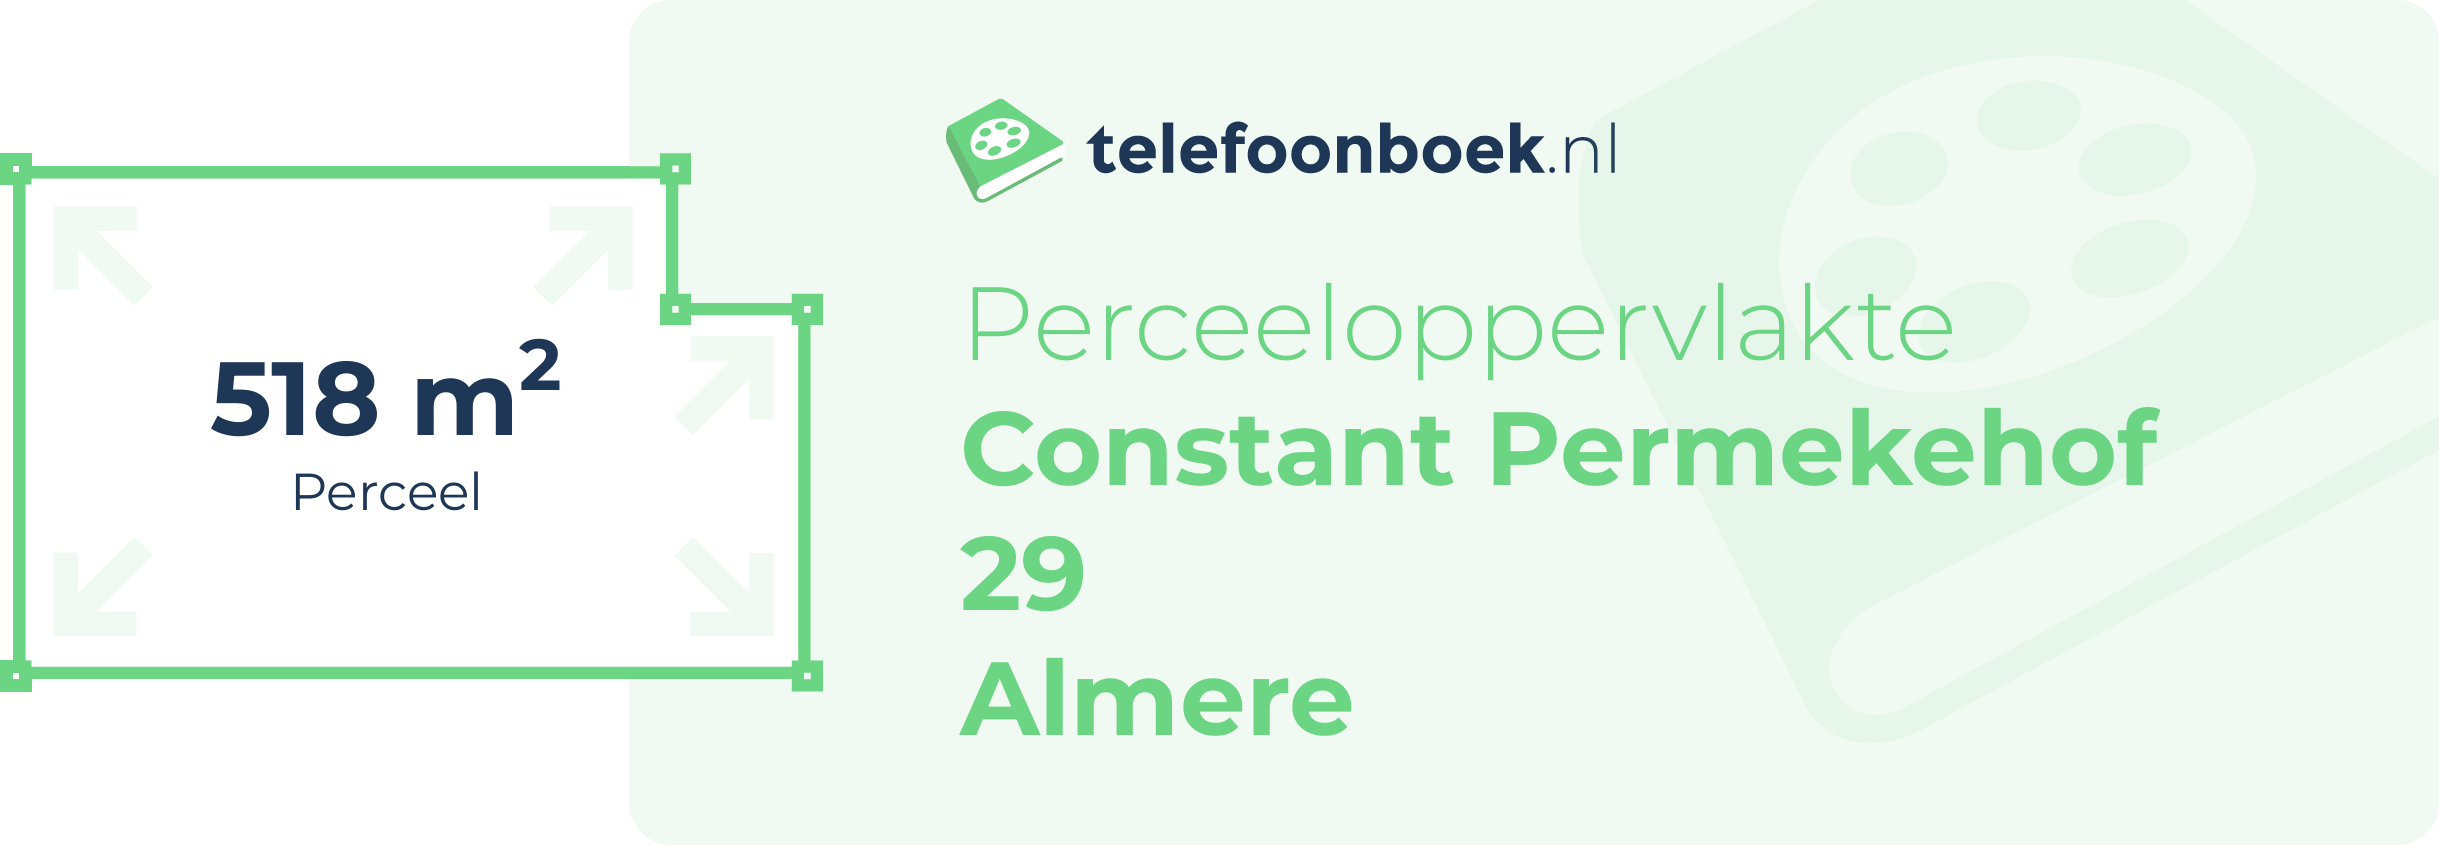 Perceeloppervlakte Constant Permekehof 29 Almere